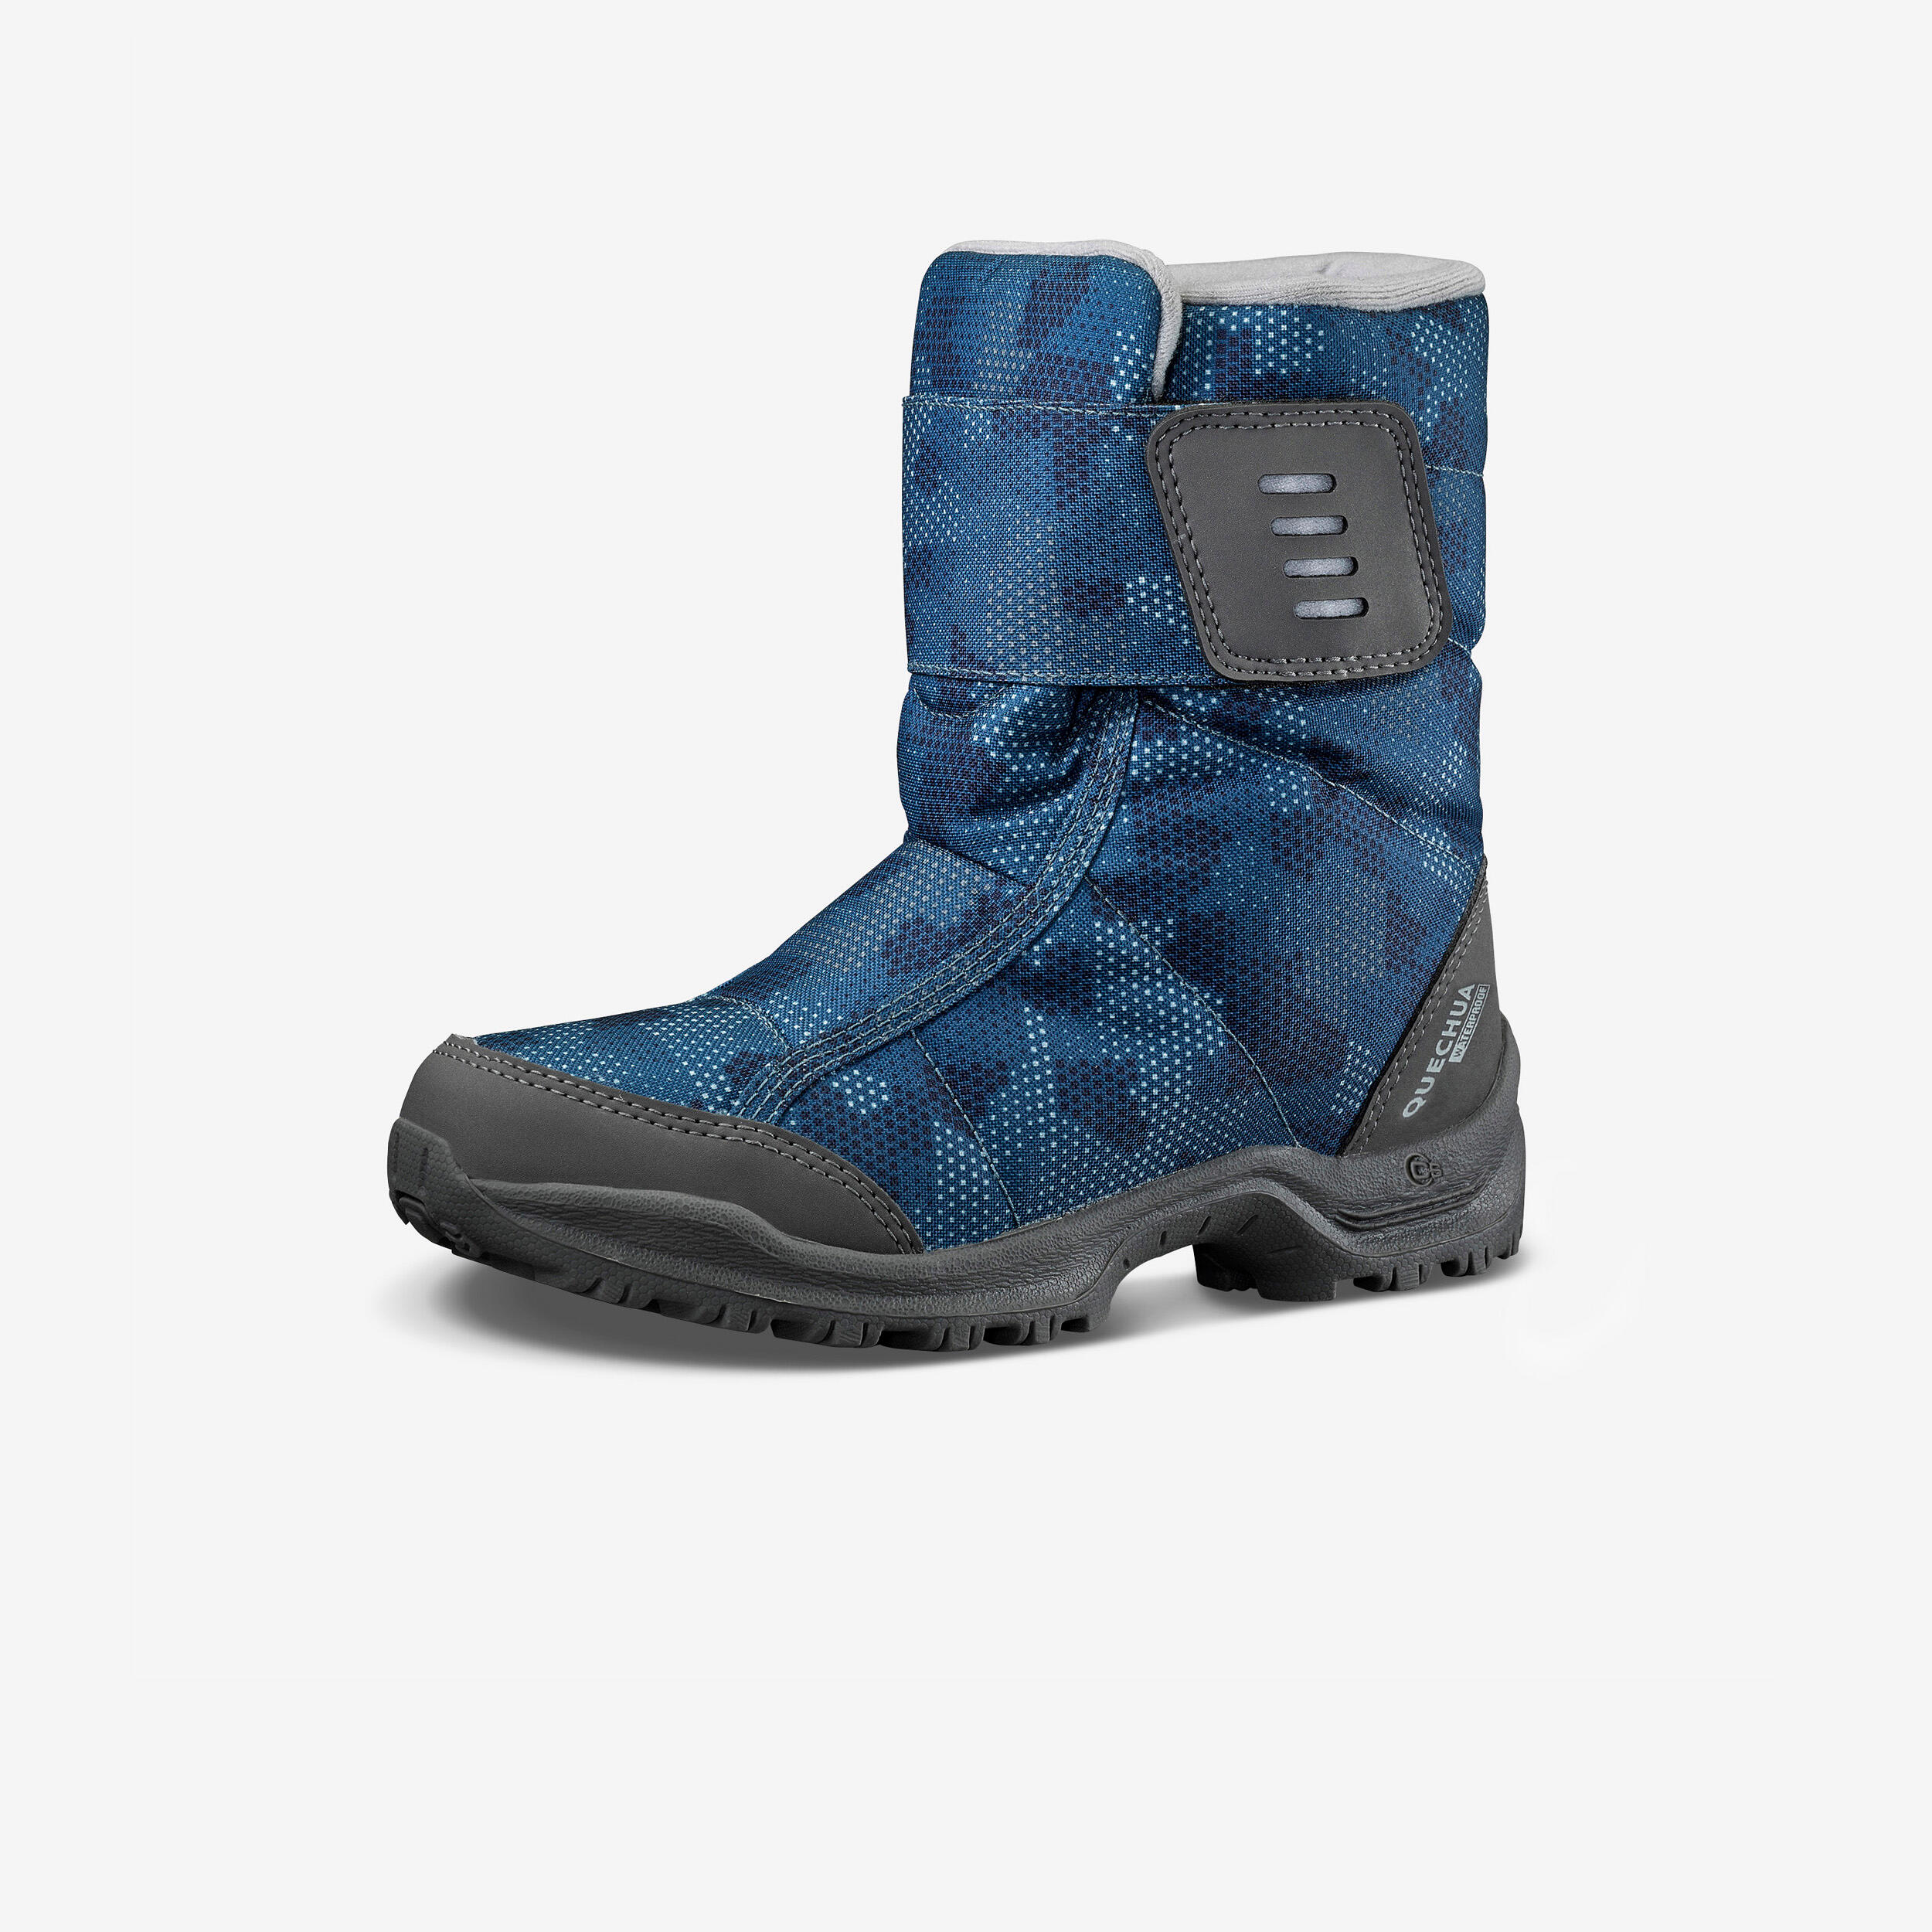 Quechua Kids’ Warm Waterproof Snow Hiking Boots Sh100 X-Warm Size 7 - 5.5 - UK 4